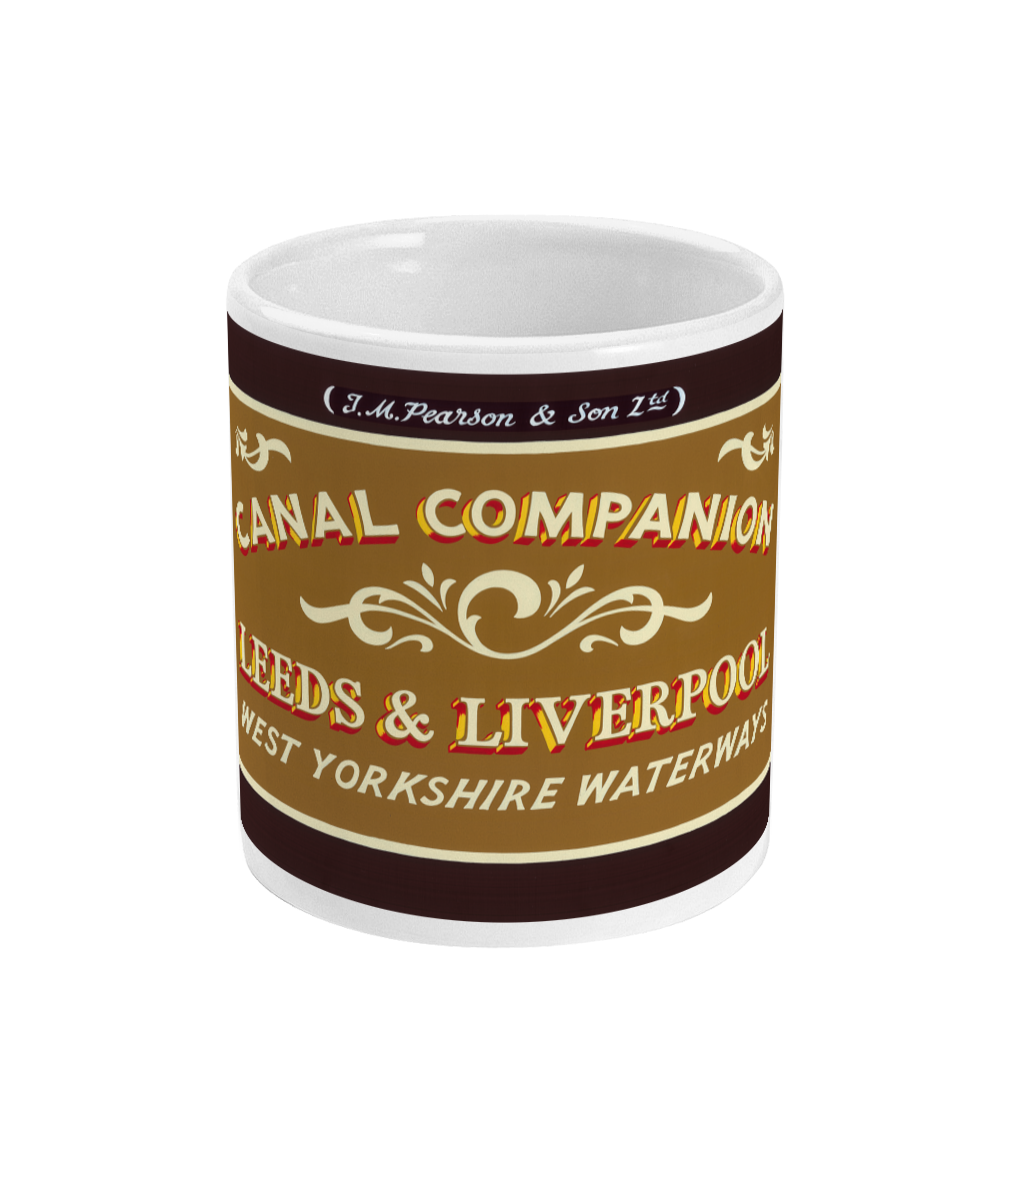 Pearson Canal Companion Ceramic Mug - Leeds & Liverpool